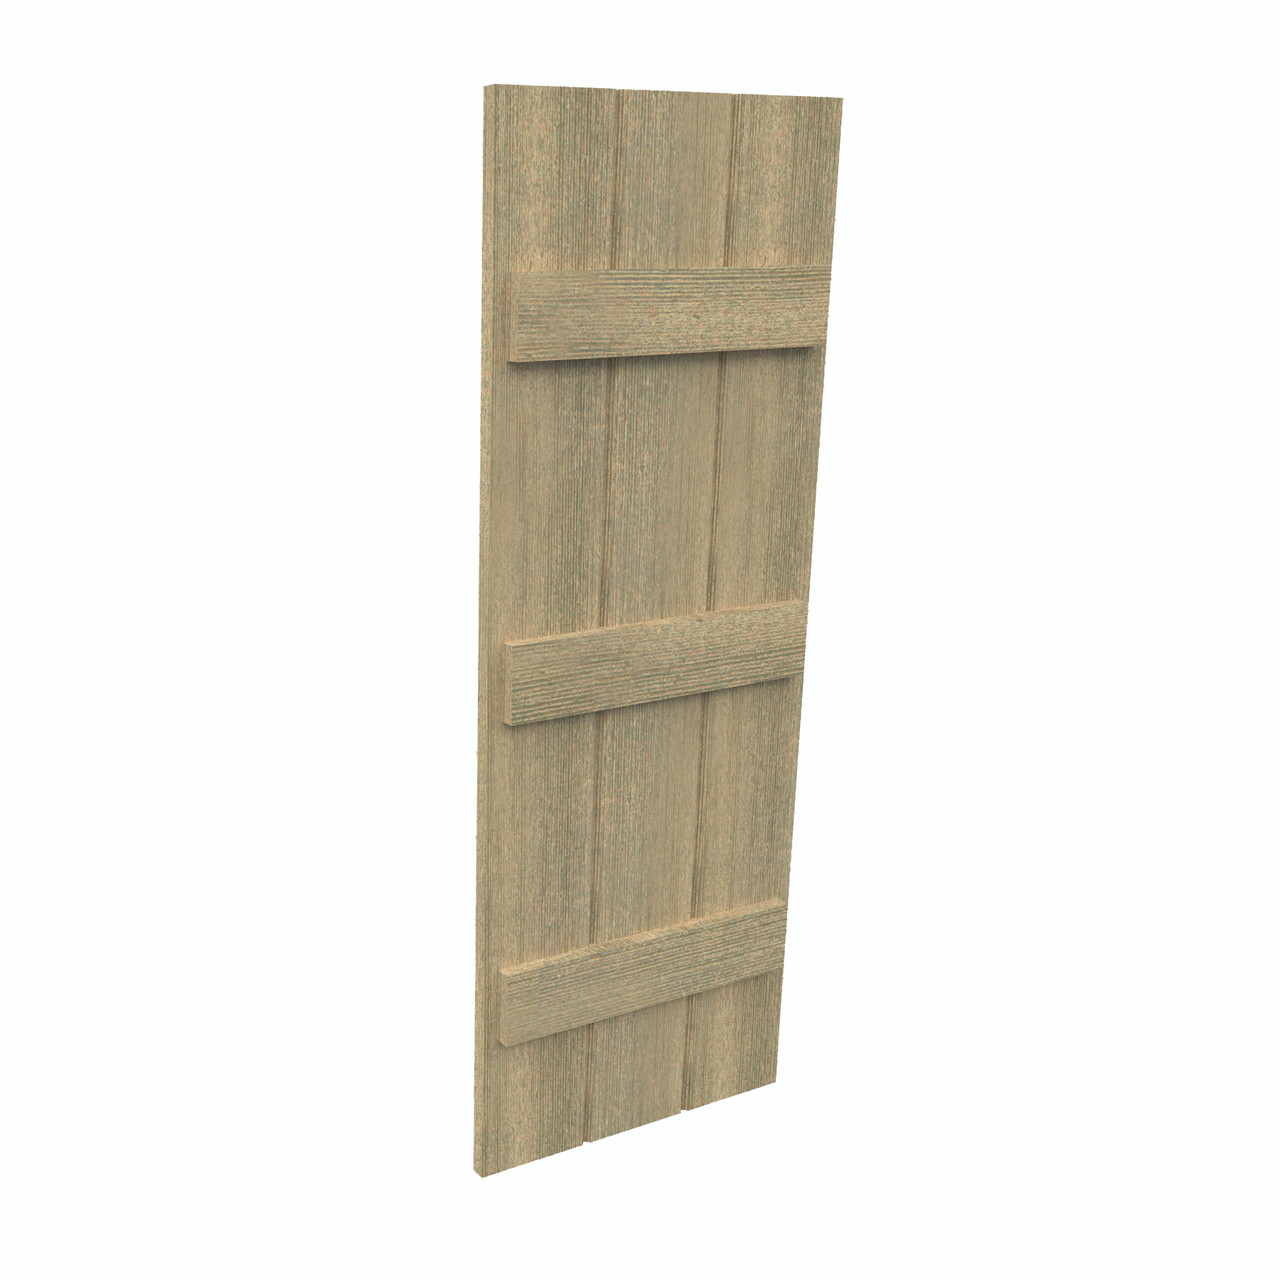 18 inch by 74 inch Plank Shutter with 3-Plank, 3-Batten